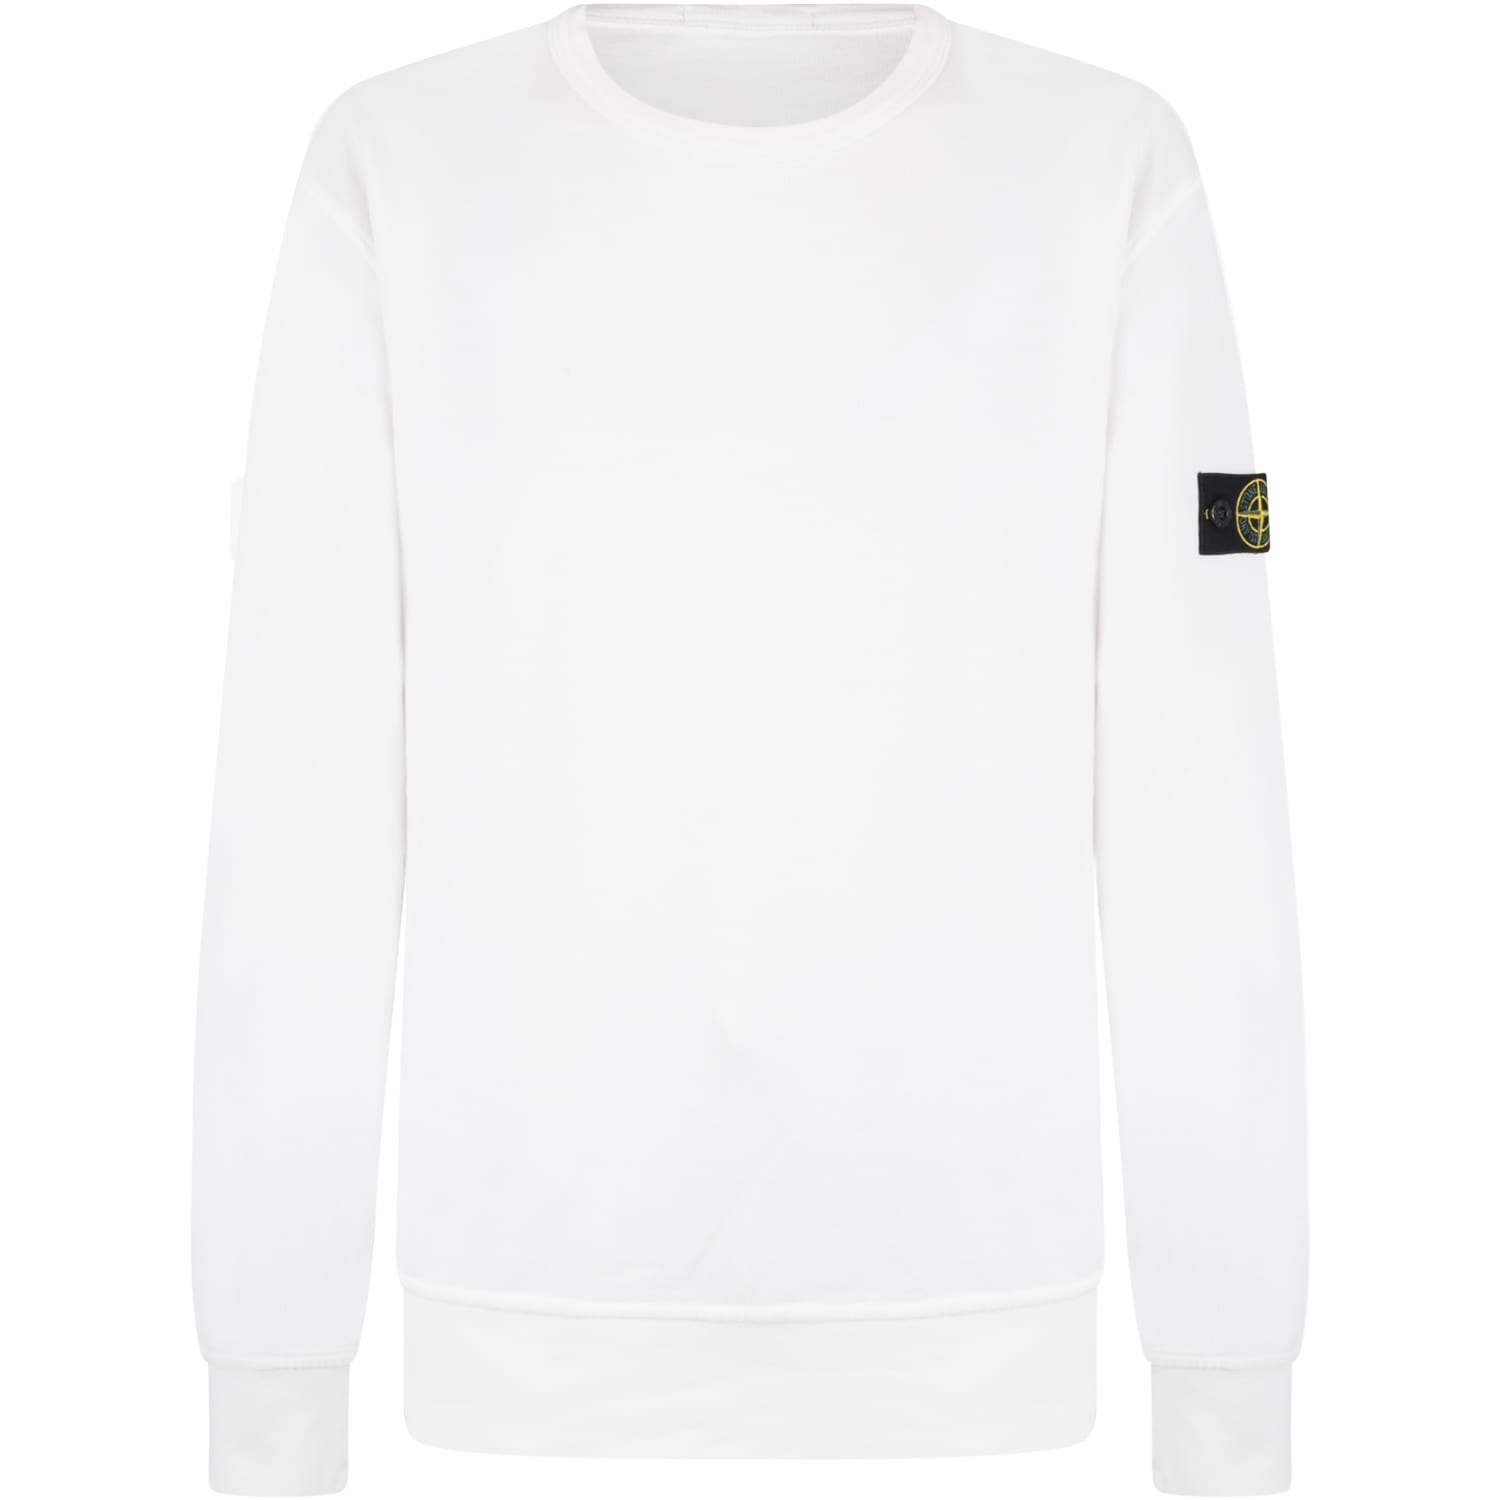 Stone Island Junior White Sweatshirt For Boy With Compass